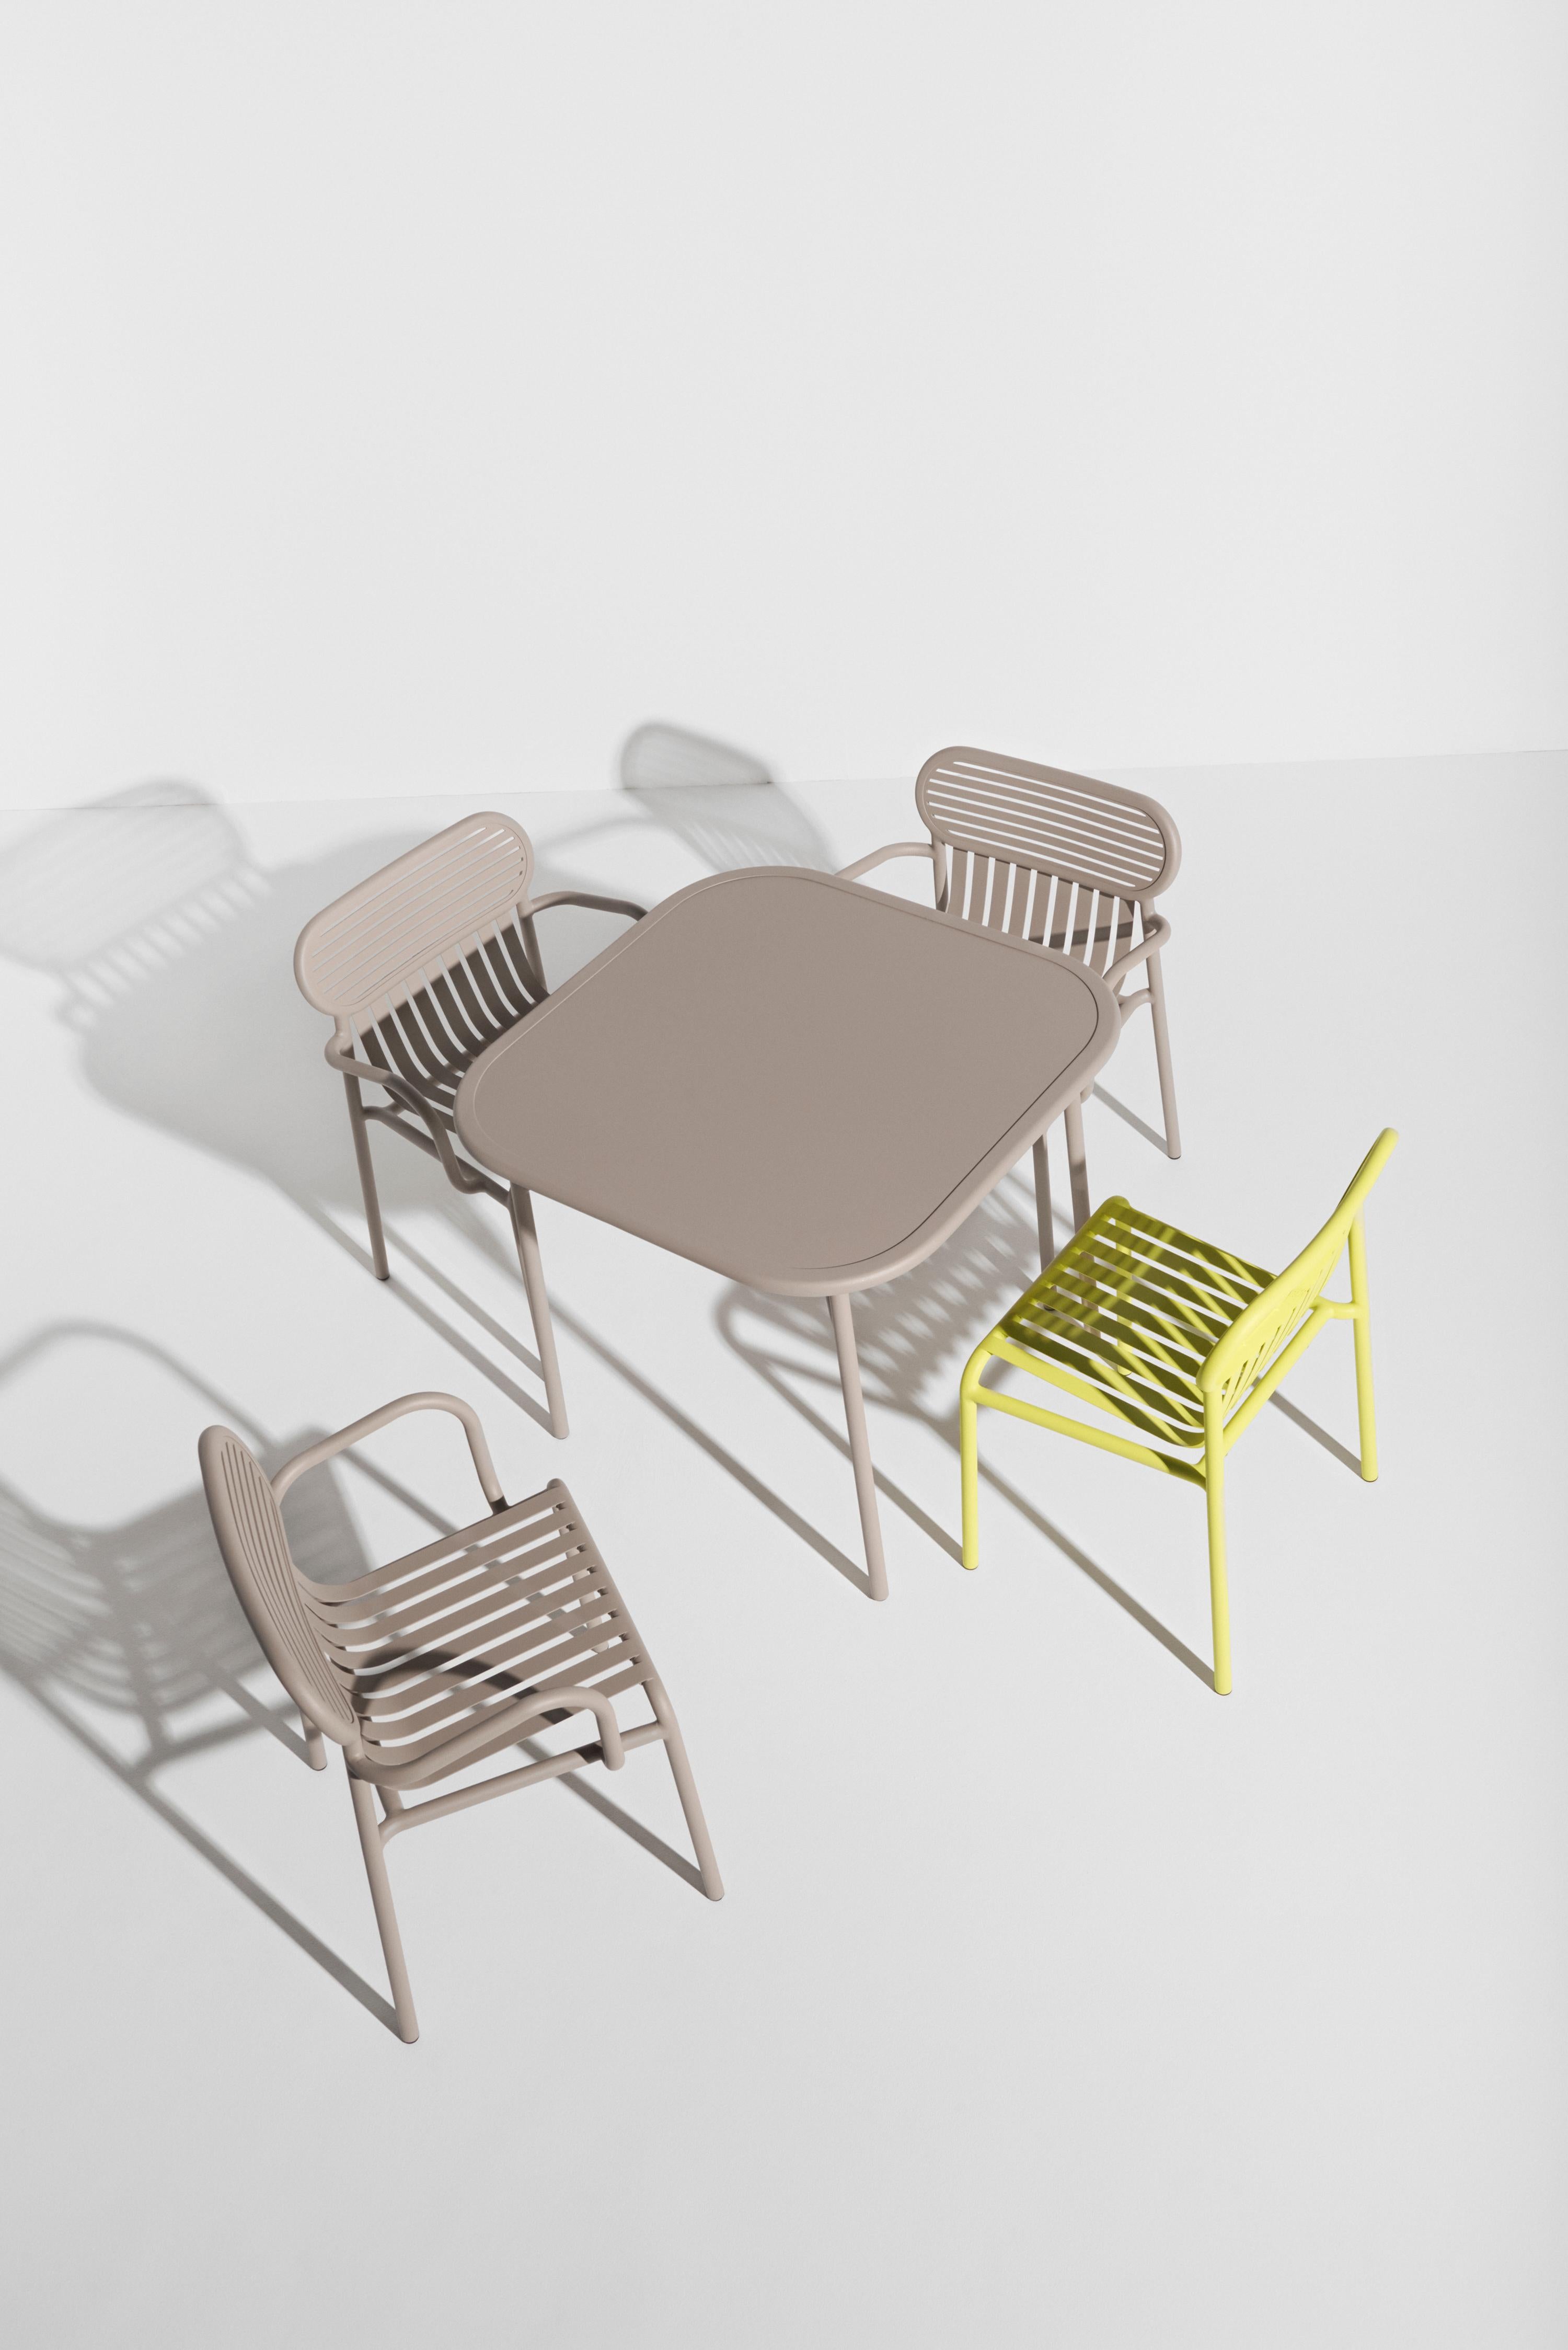 Petite Friture Week-End Bridge Chair in Yellow Aluminium, 2017 For Sale 1